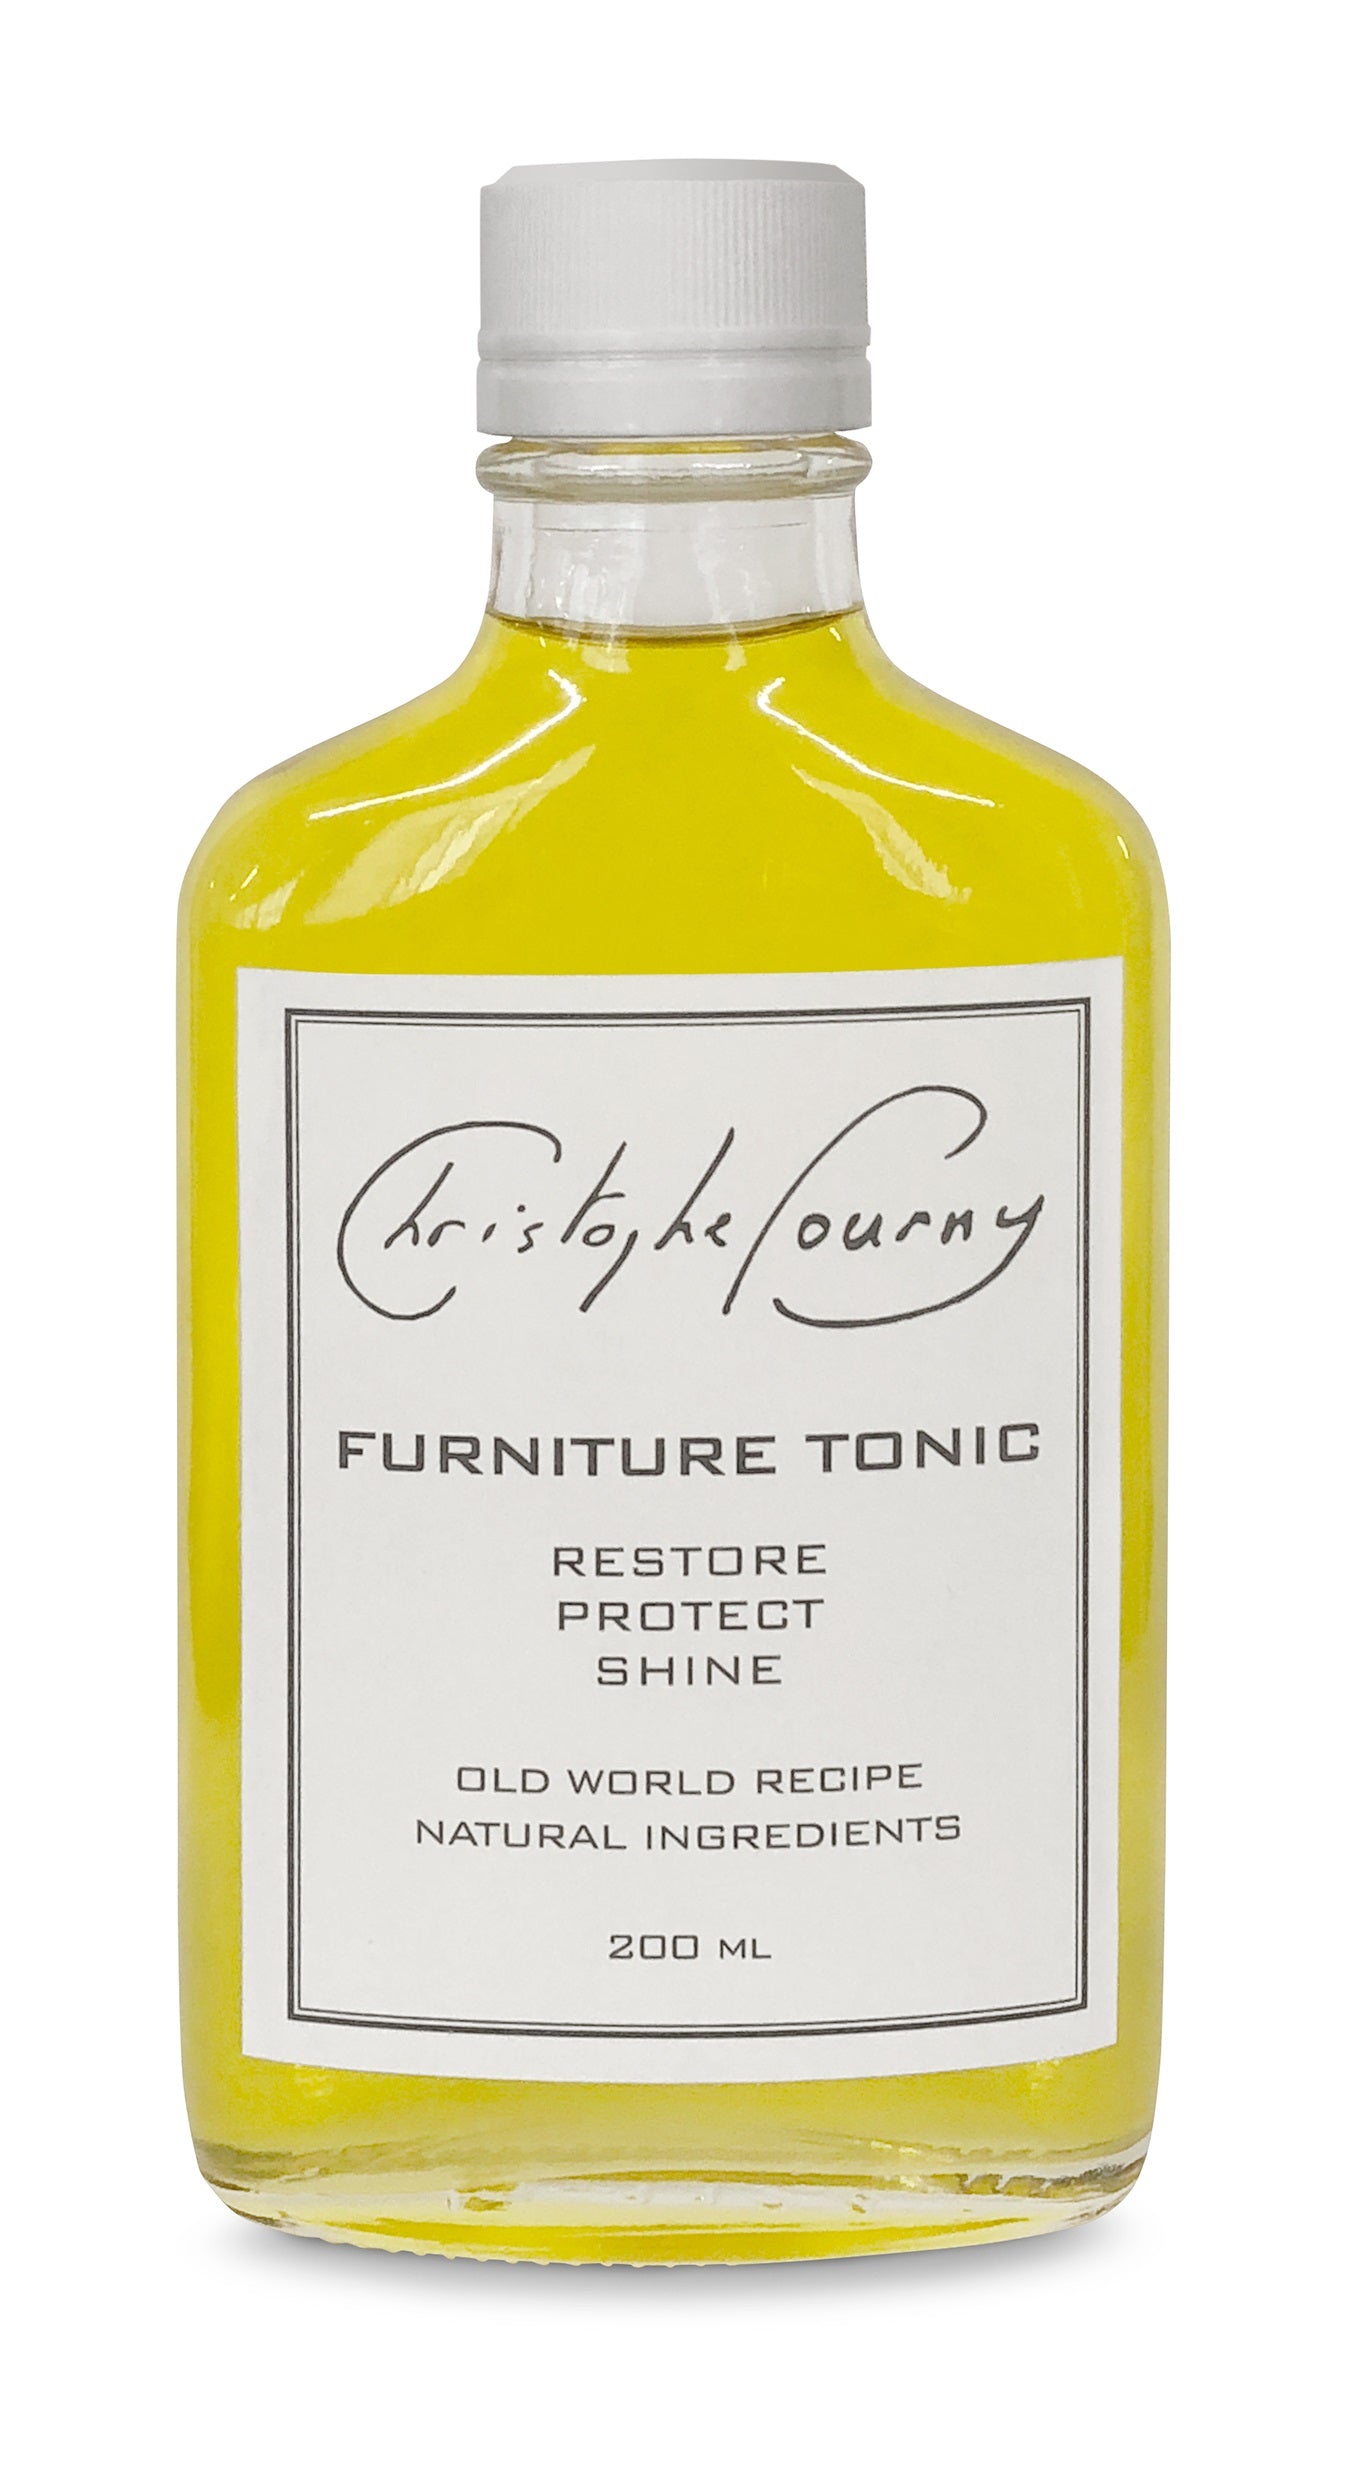 Christophe Pourny Furniture Tonic